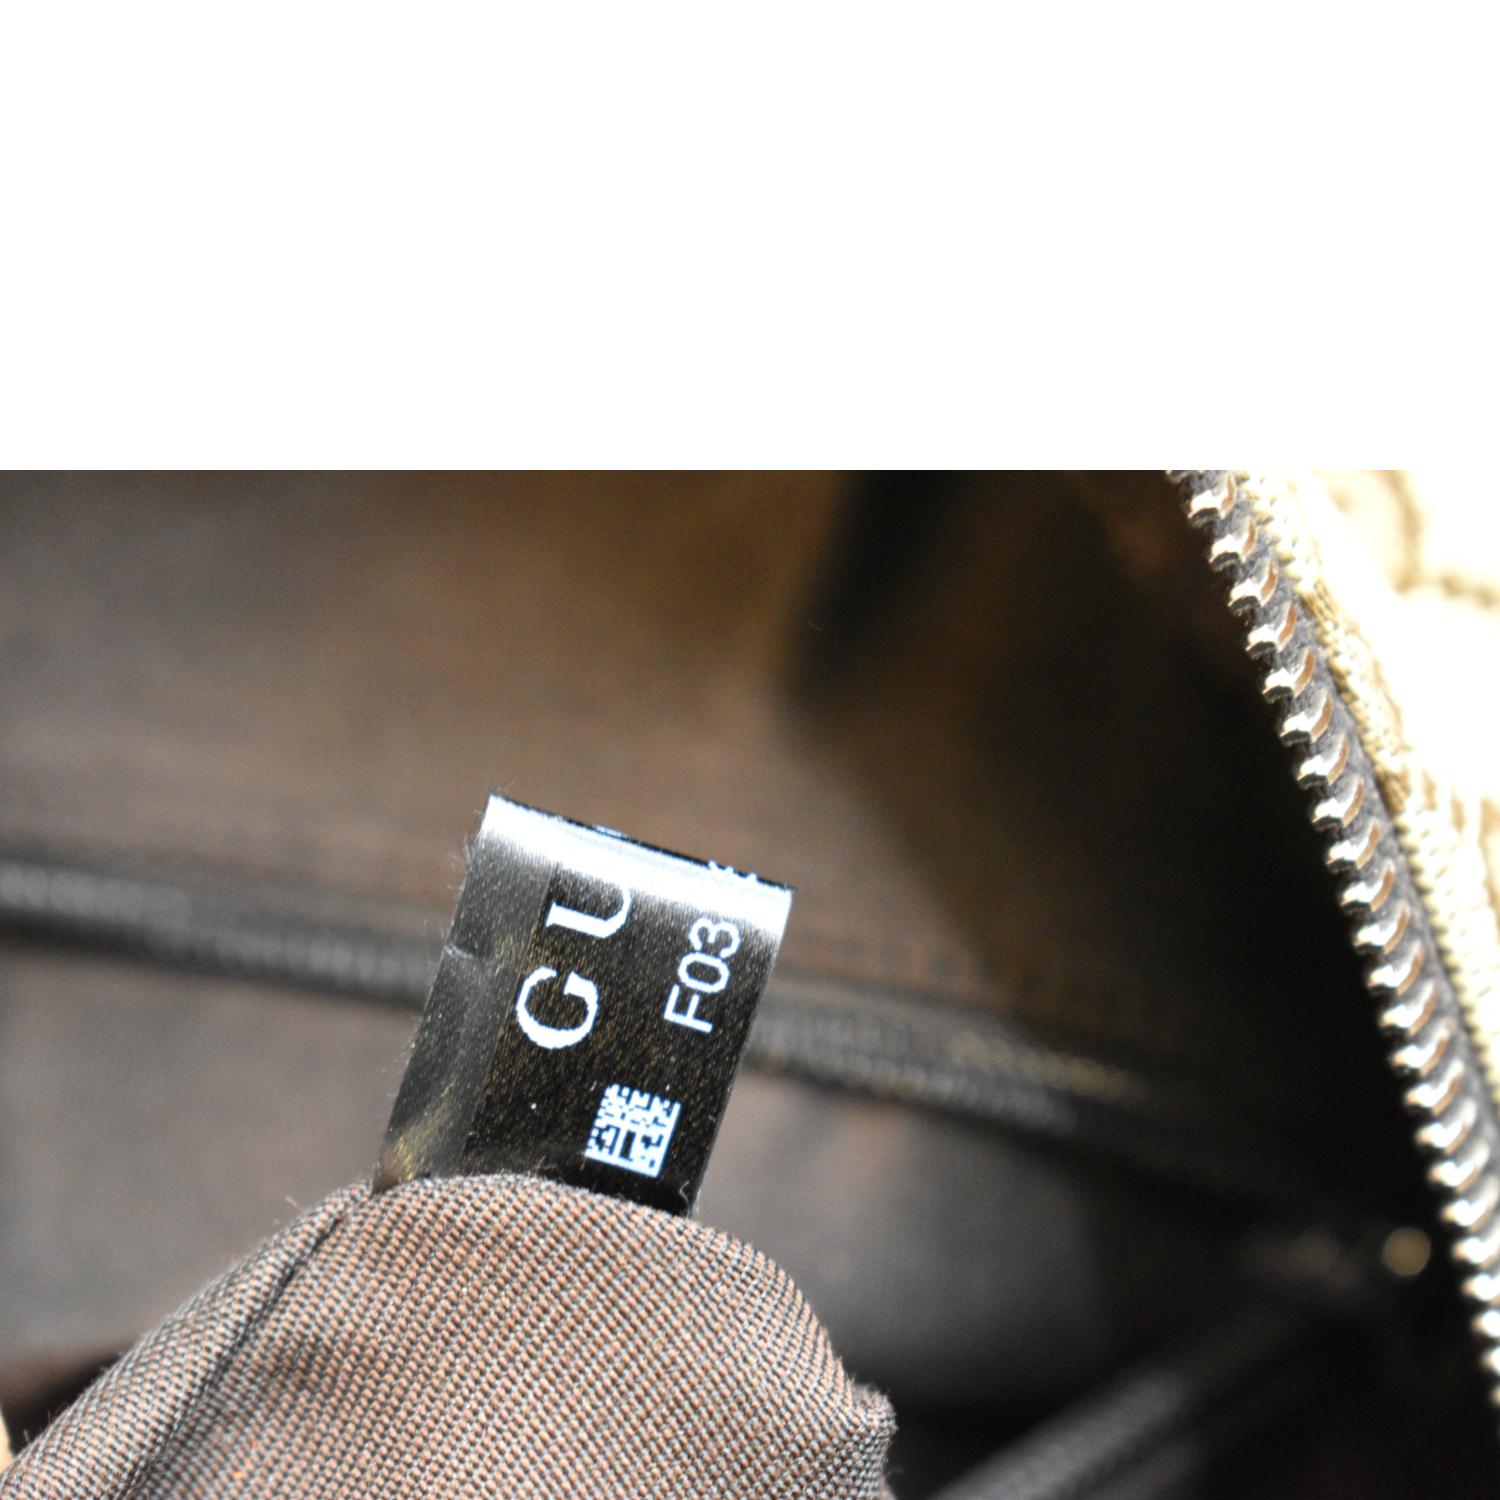 Cloth backpack Gucci Beige in Cloth - 21403691